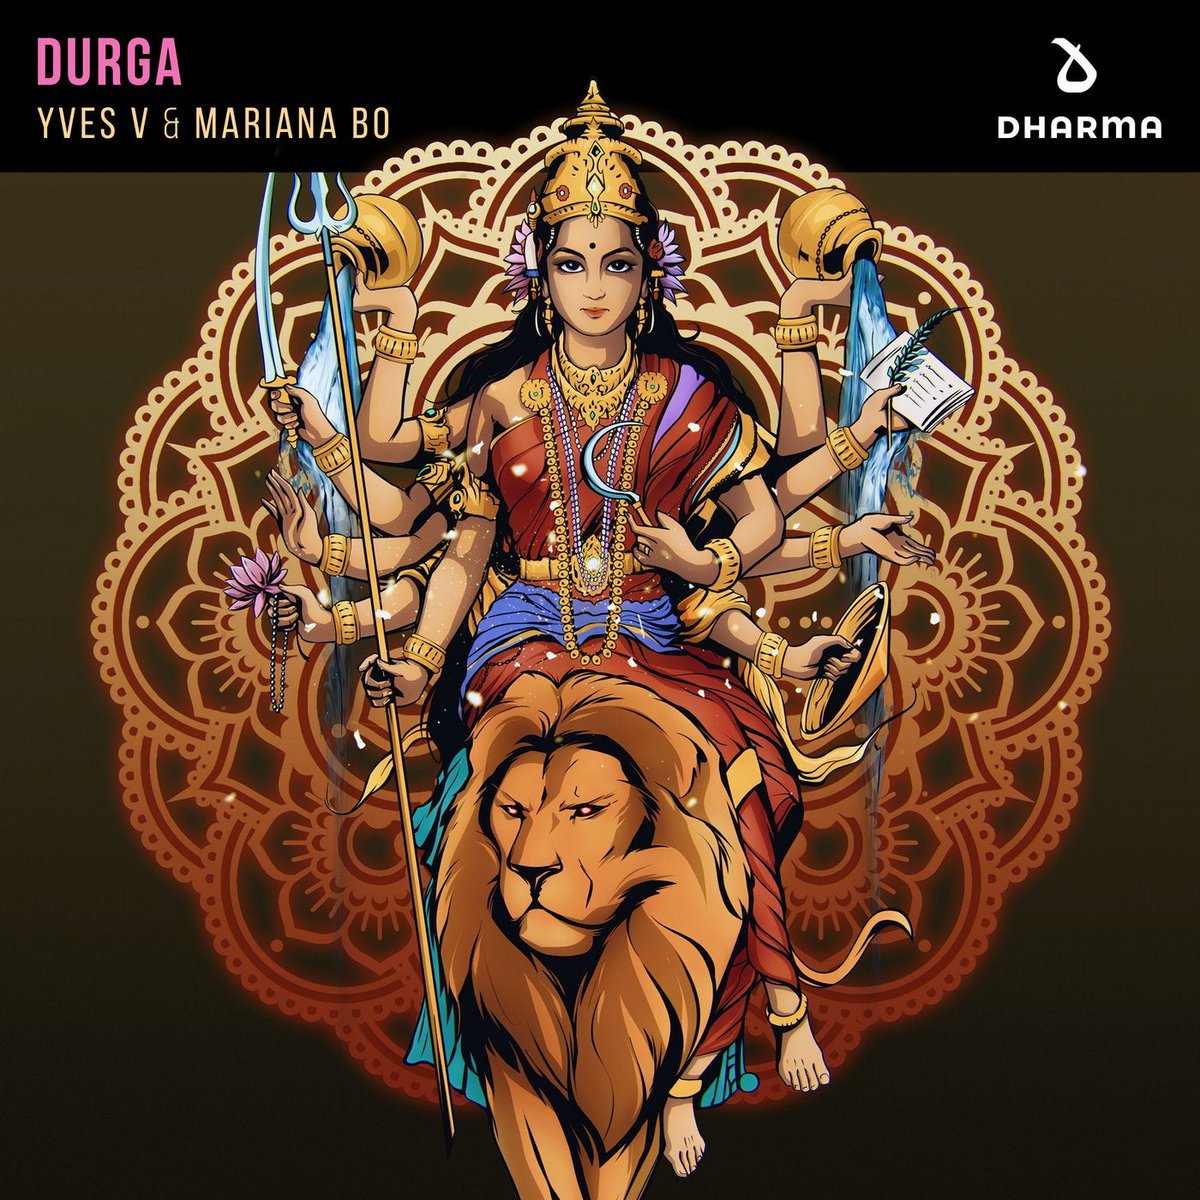 #DR300 #DanceRituals
01. @yvesv & @djmarianabo - Durga (Mariana BO Edit) [@DharmaWorldwide]

#TechHouse
beatdigital.mx